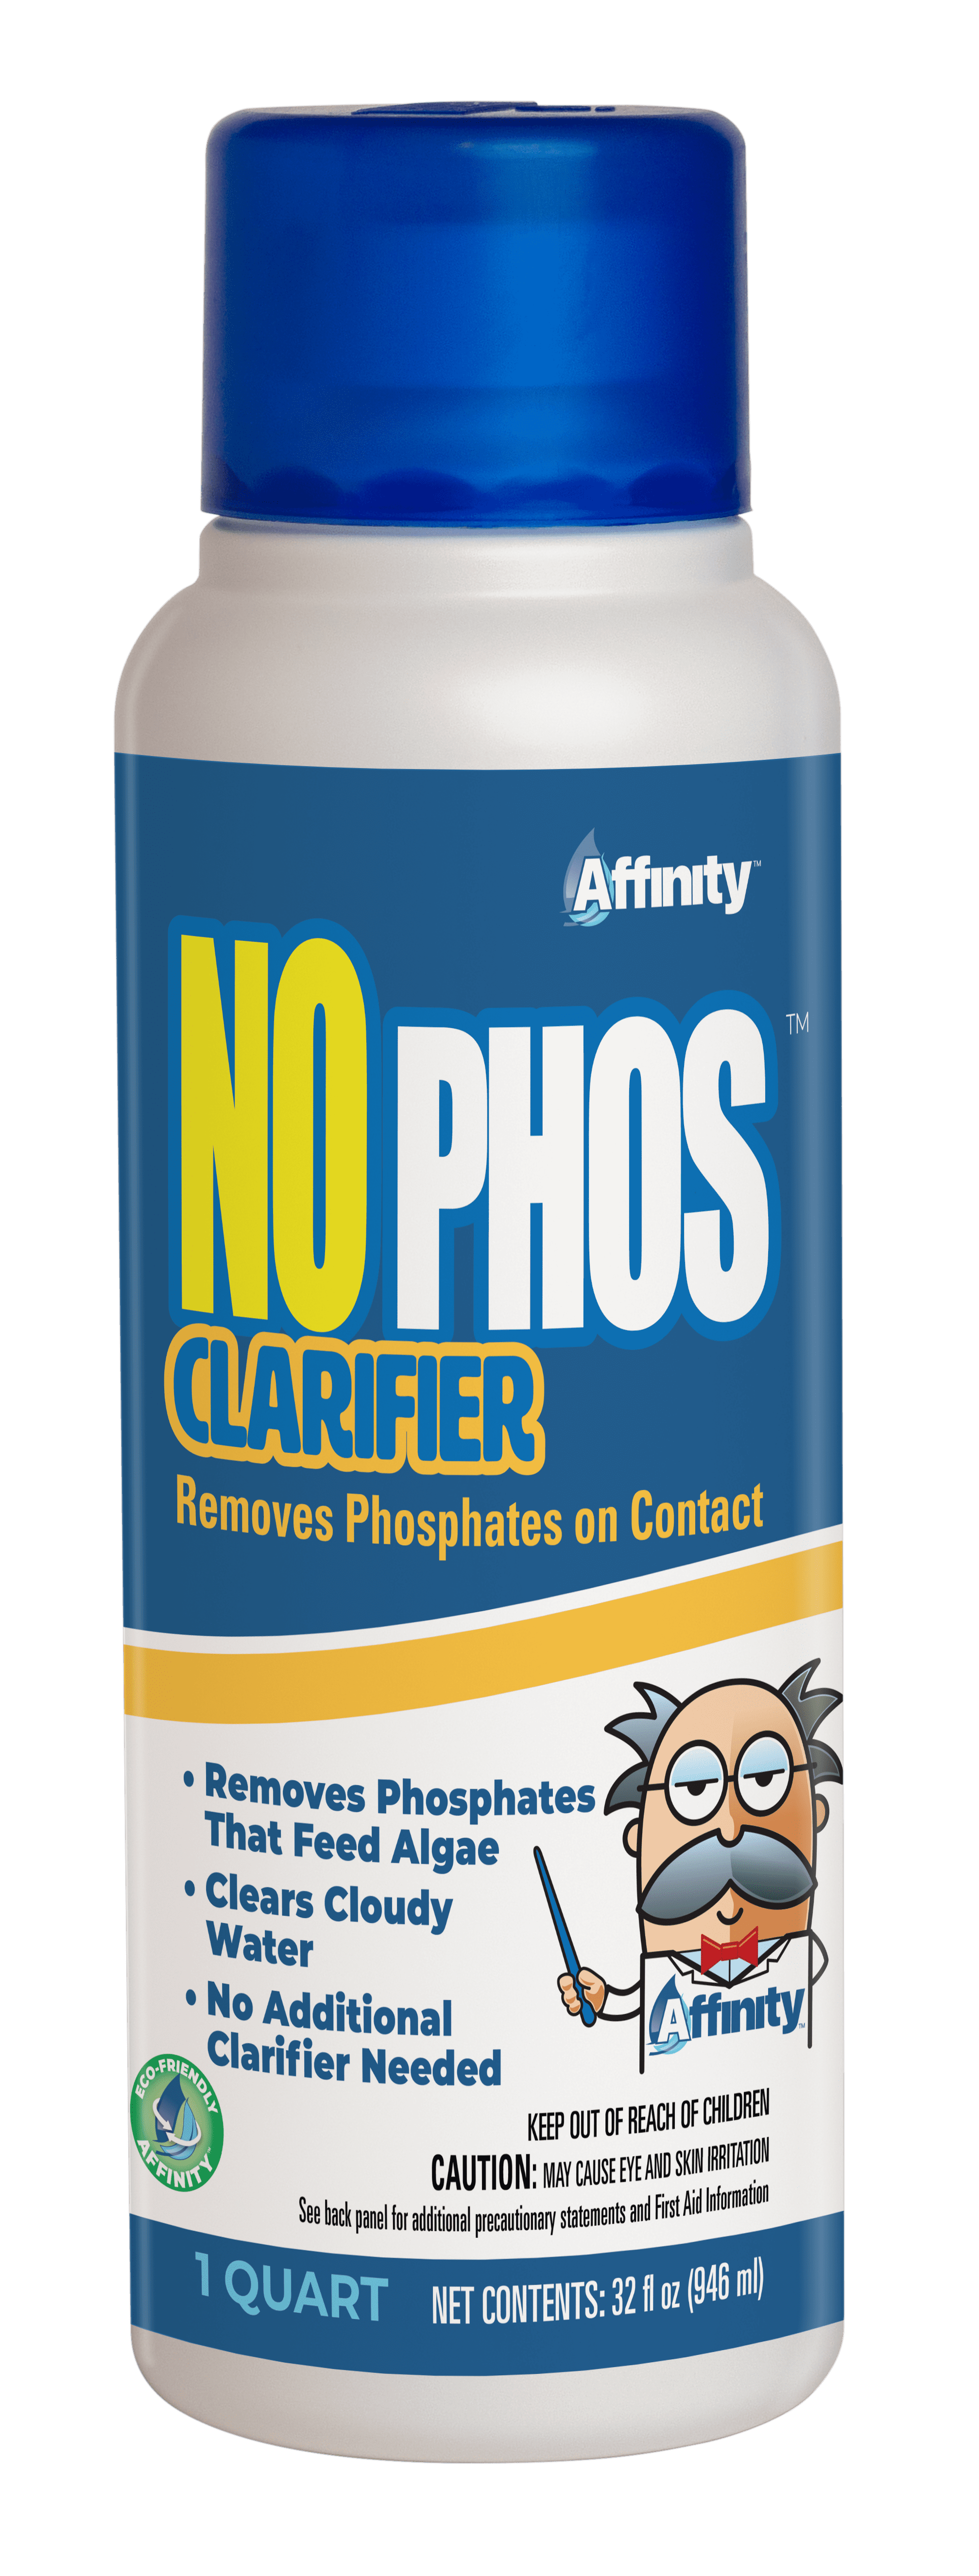 Affinity No Phos Clarifier